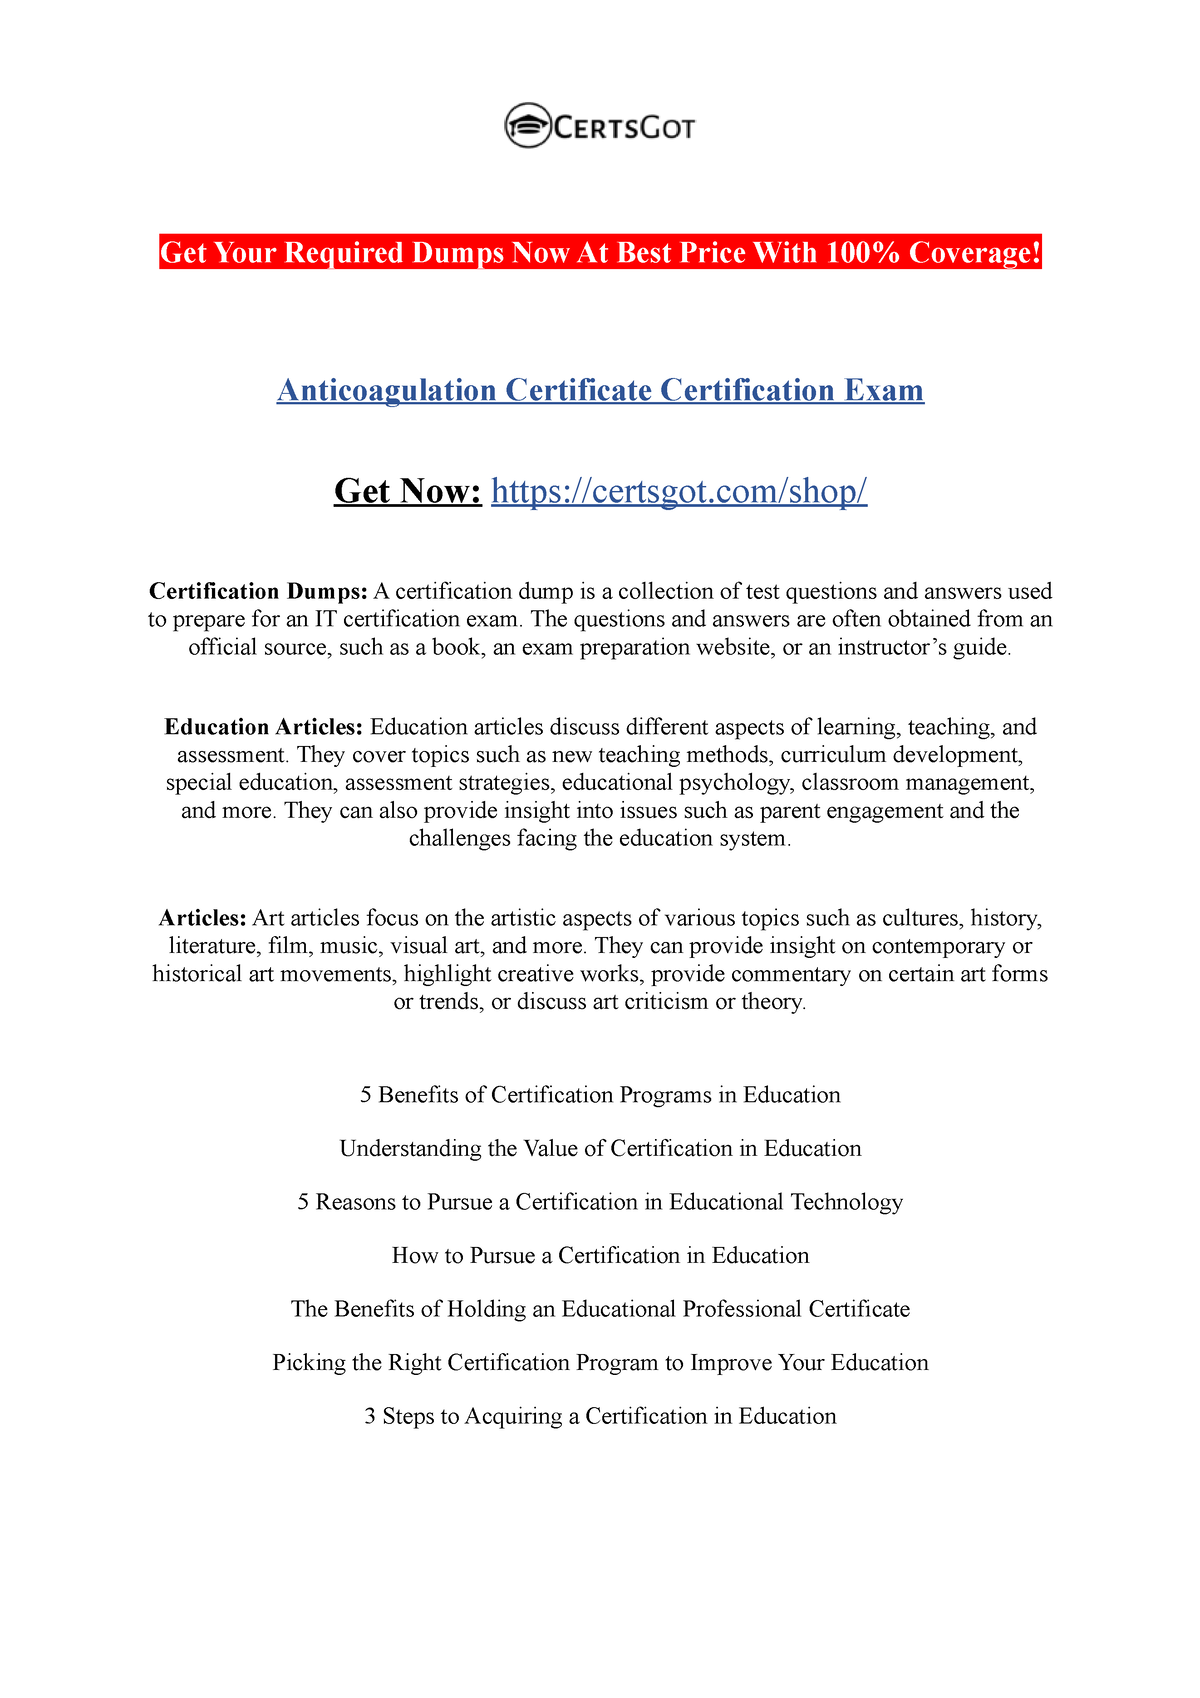 Anticoagulation Certificate Certification Exam Get Your Required